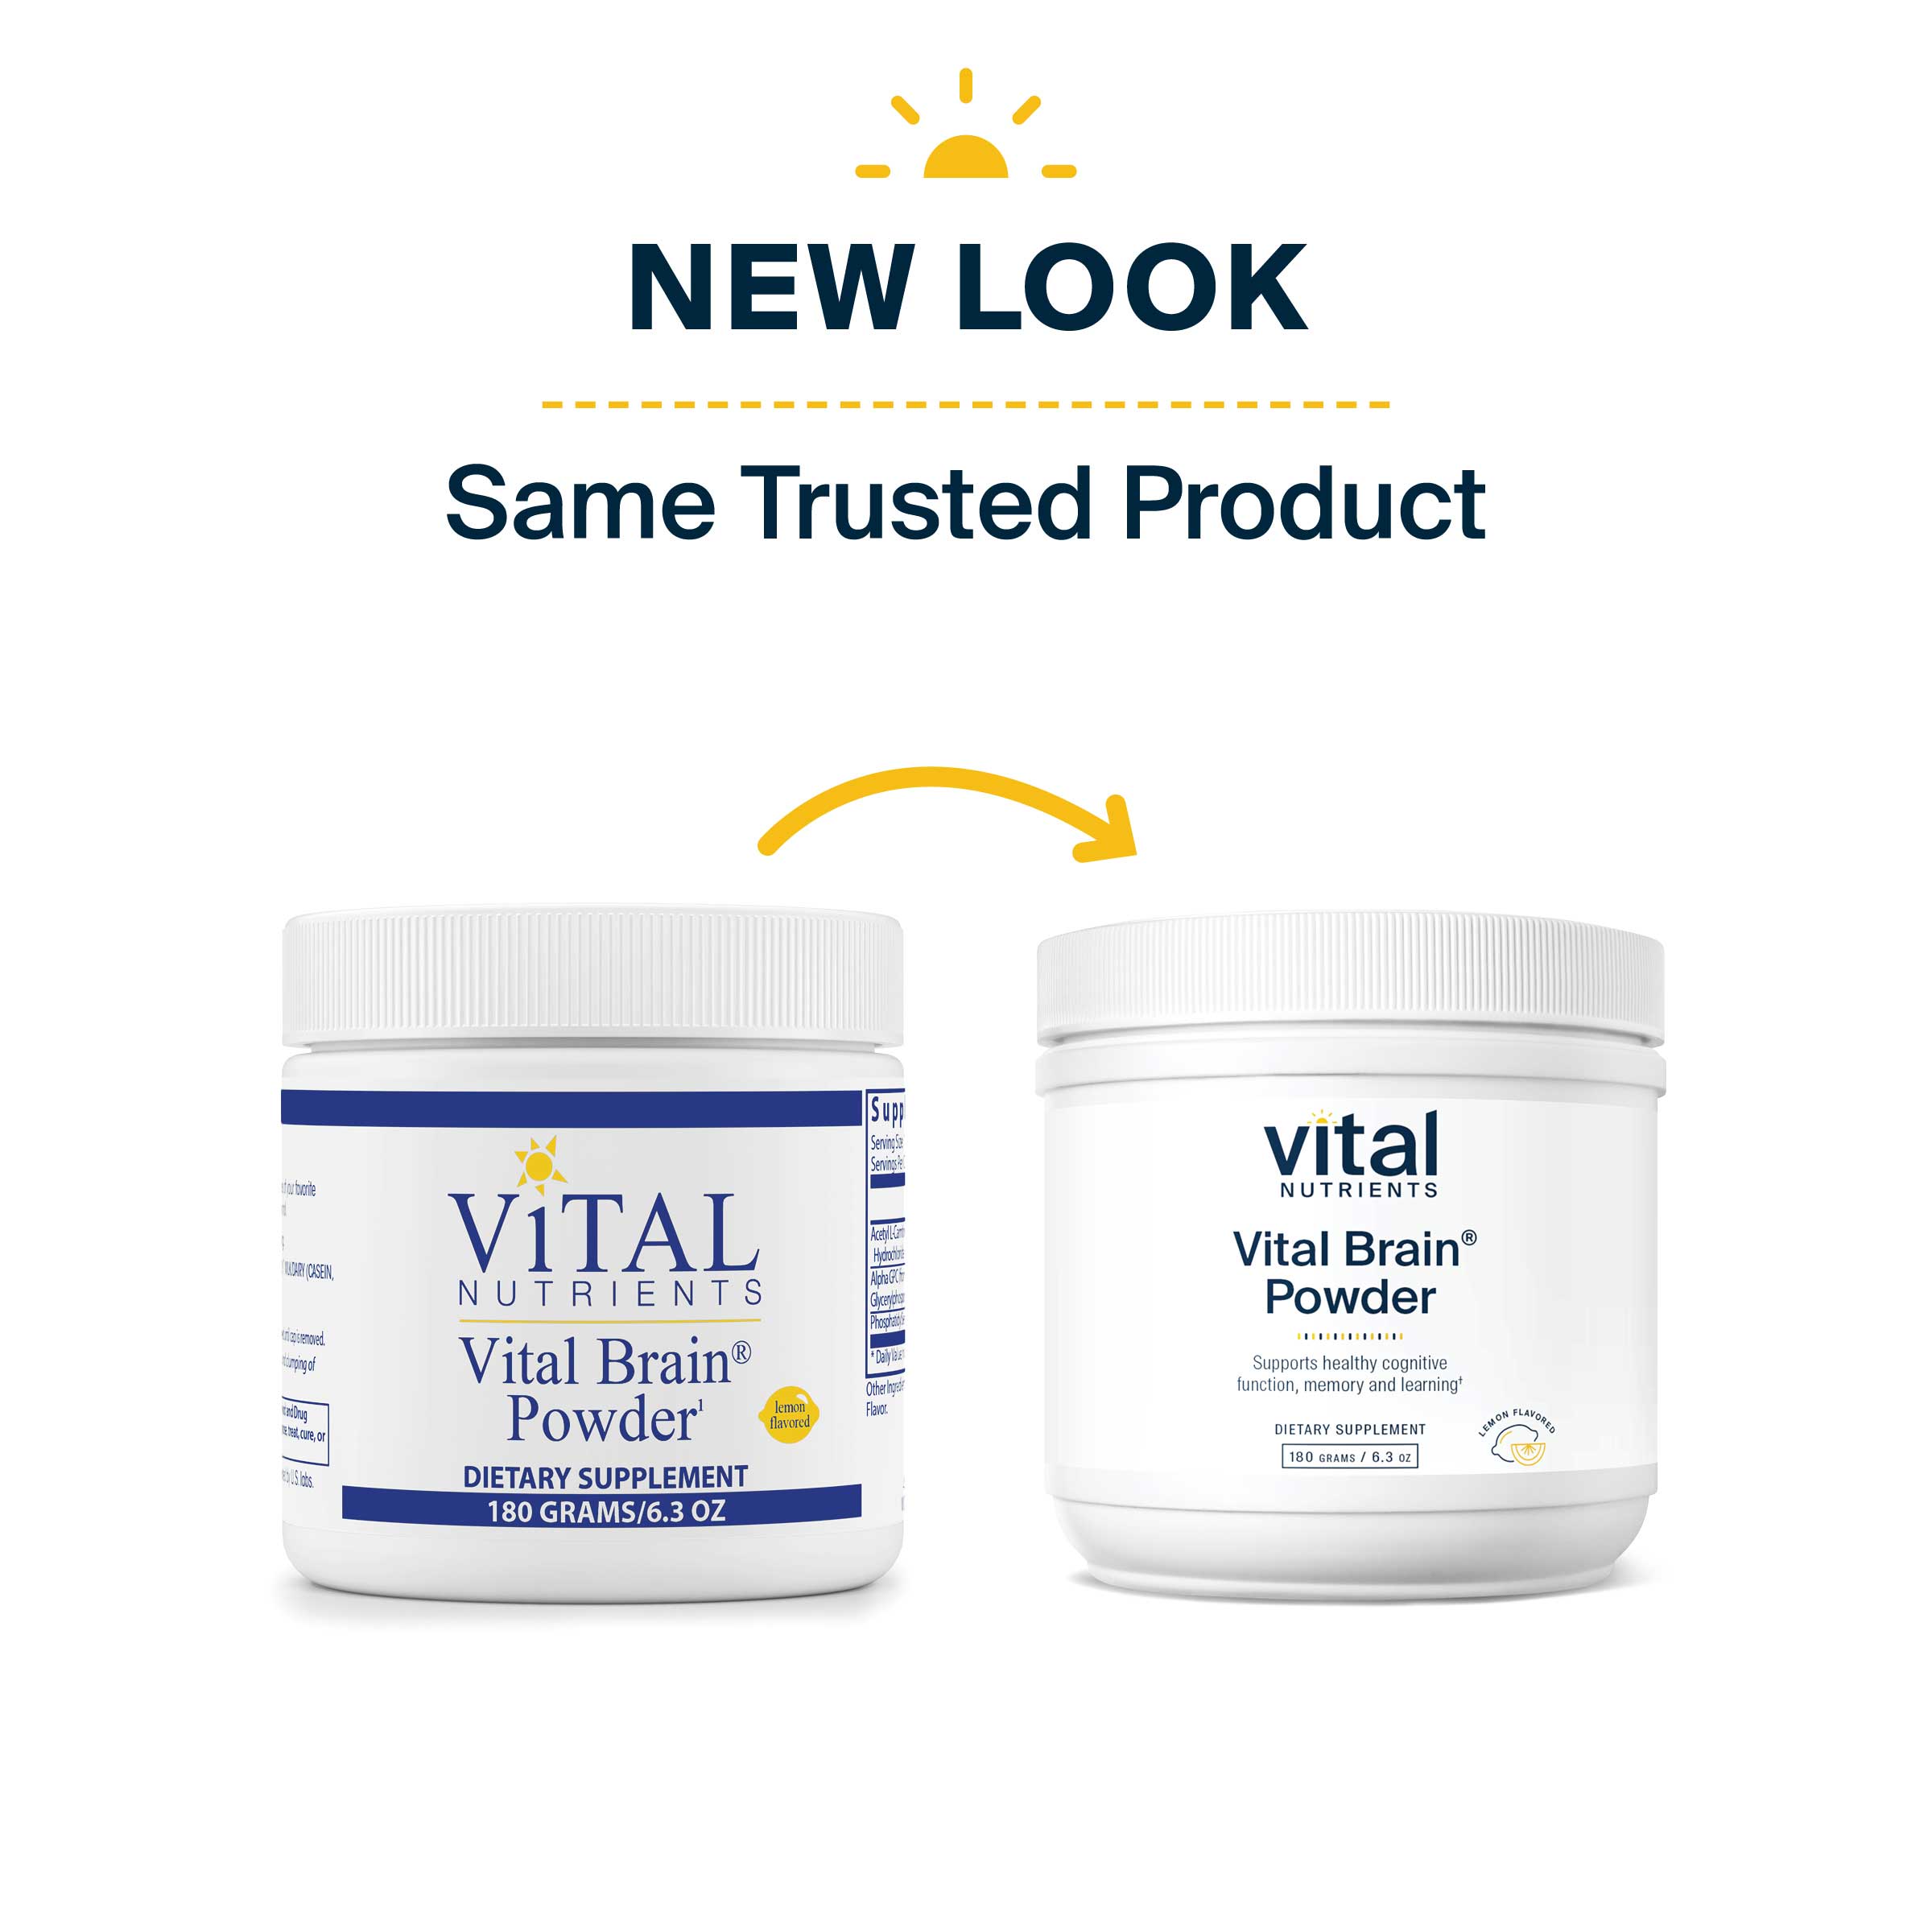 Vital Nutrients Vital Brain Powder New Look